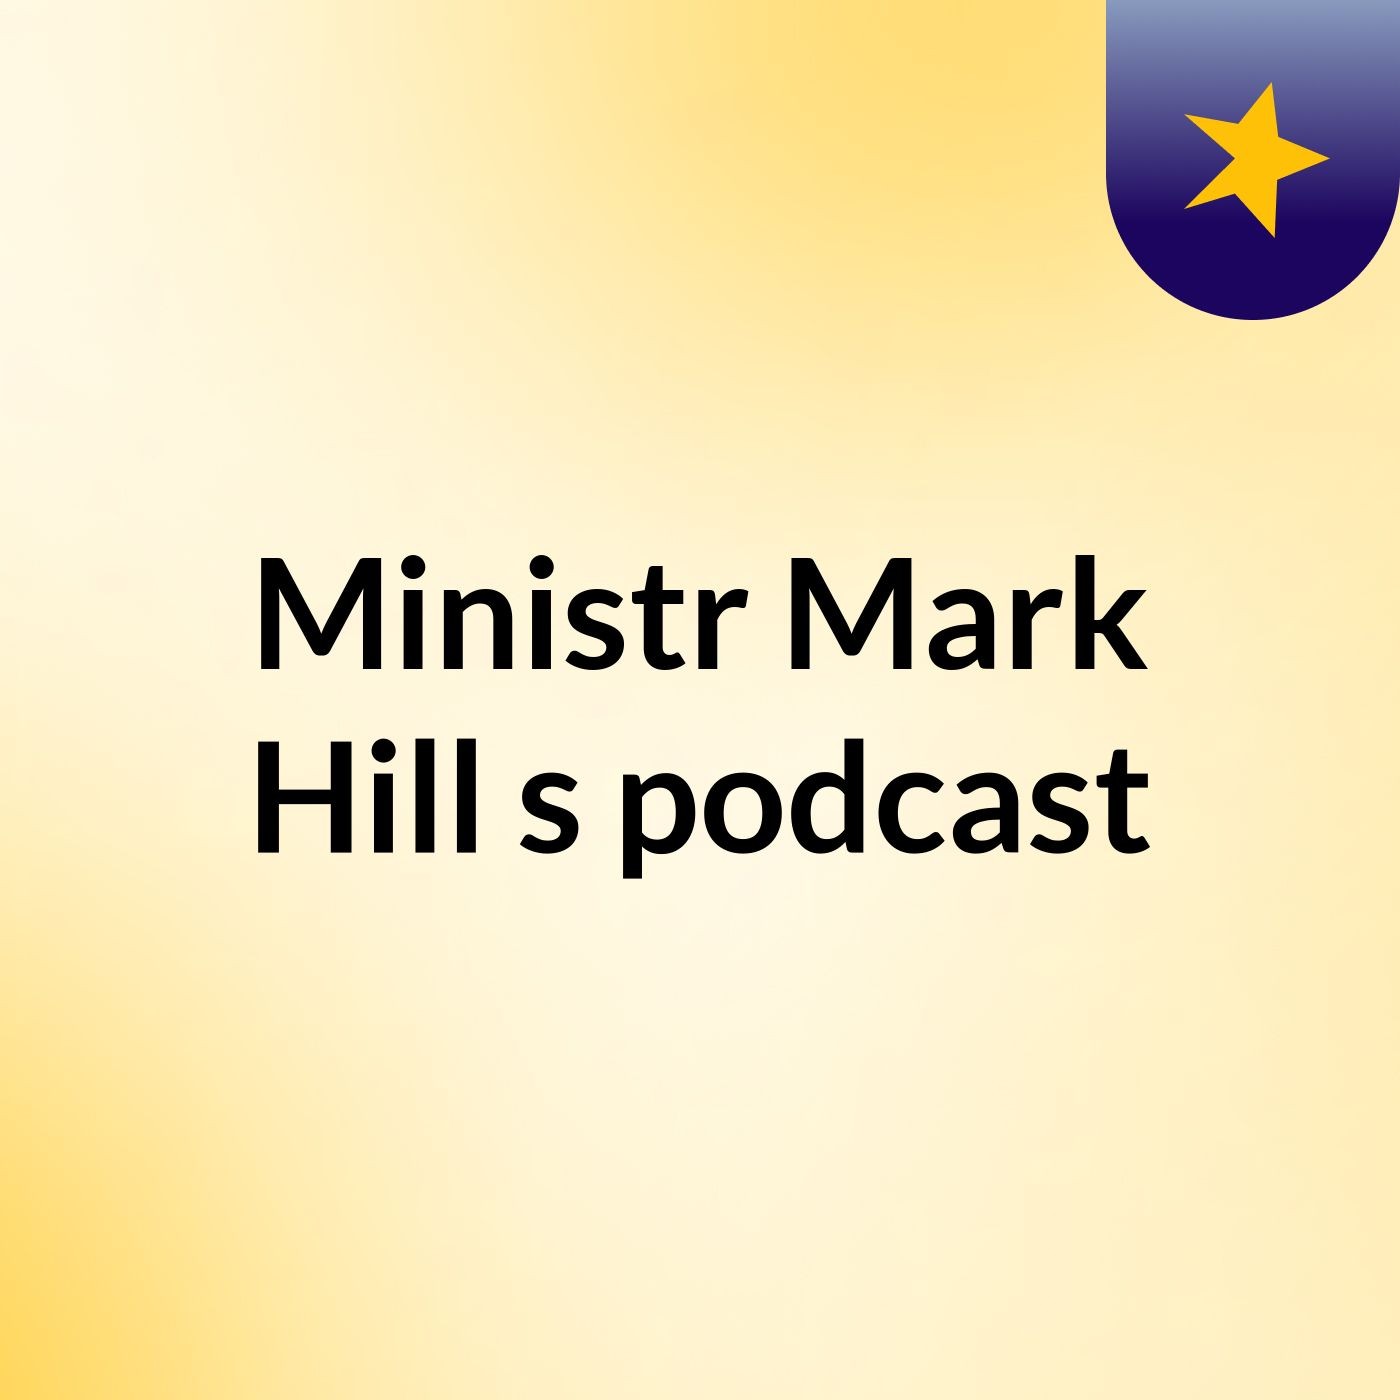 Ministr Mark Hill's podcast